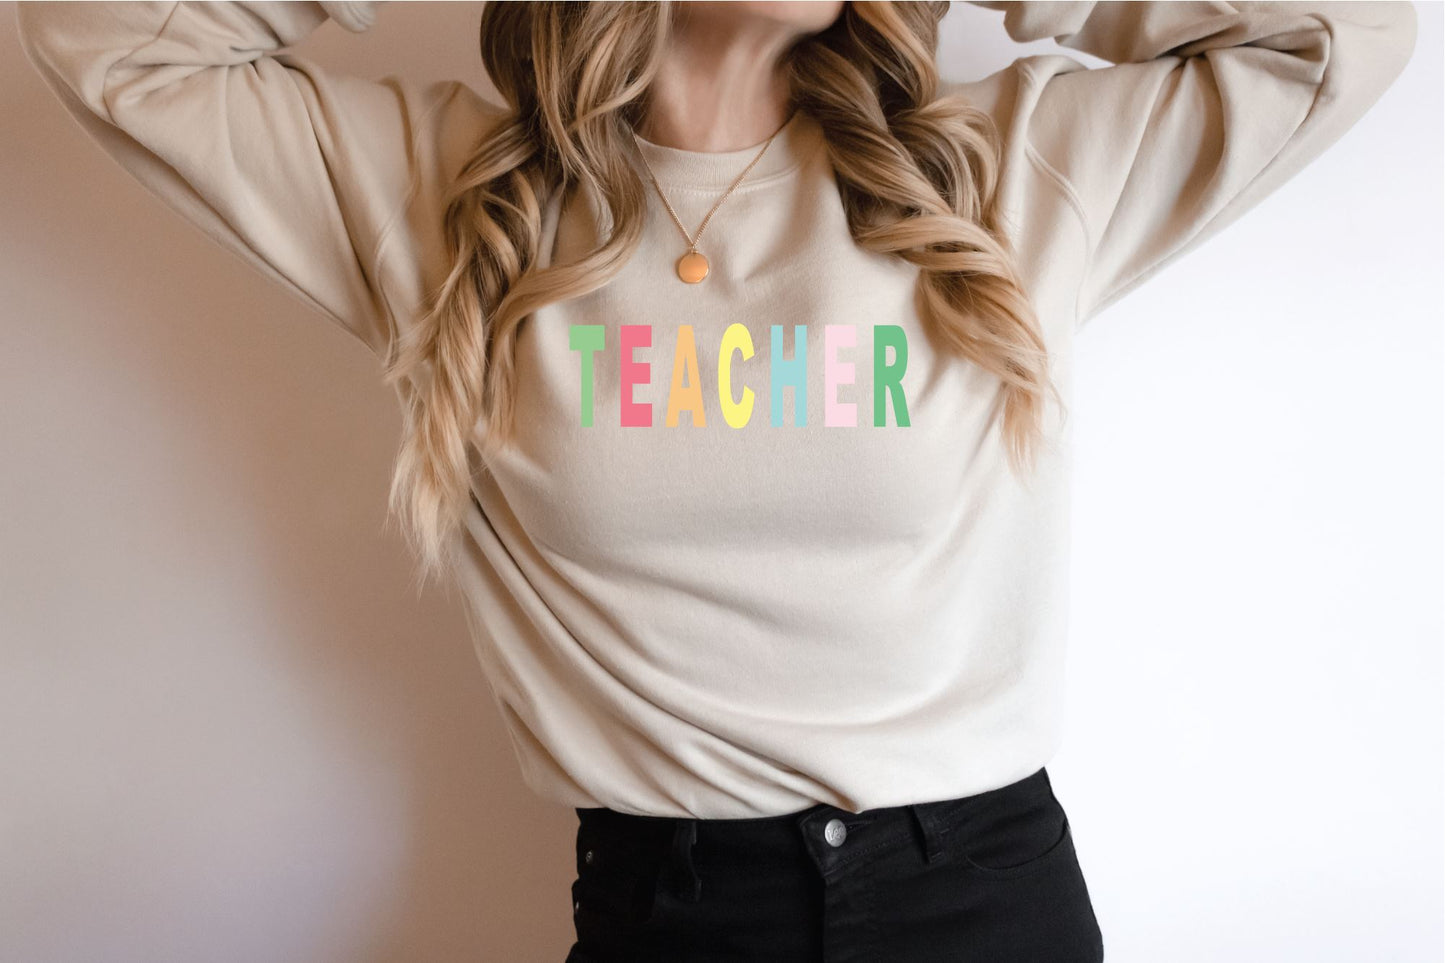 Pastel Teacher Sweatshirt